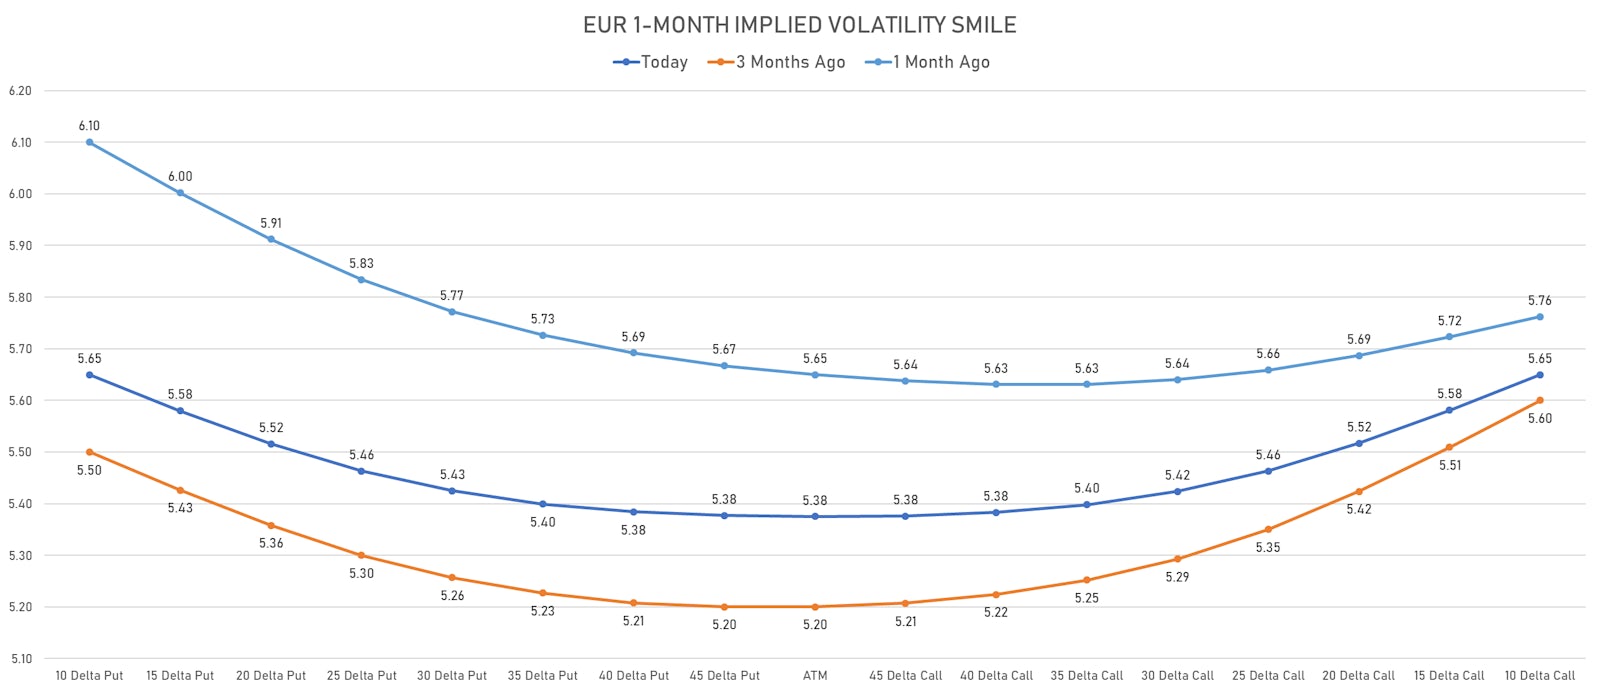 EUR 1-Month implied volatility smile | Sources: ϕpost, Refinitiv data